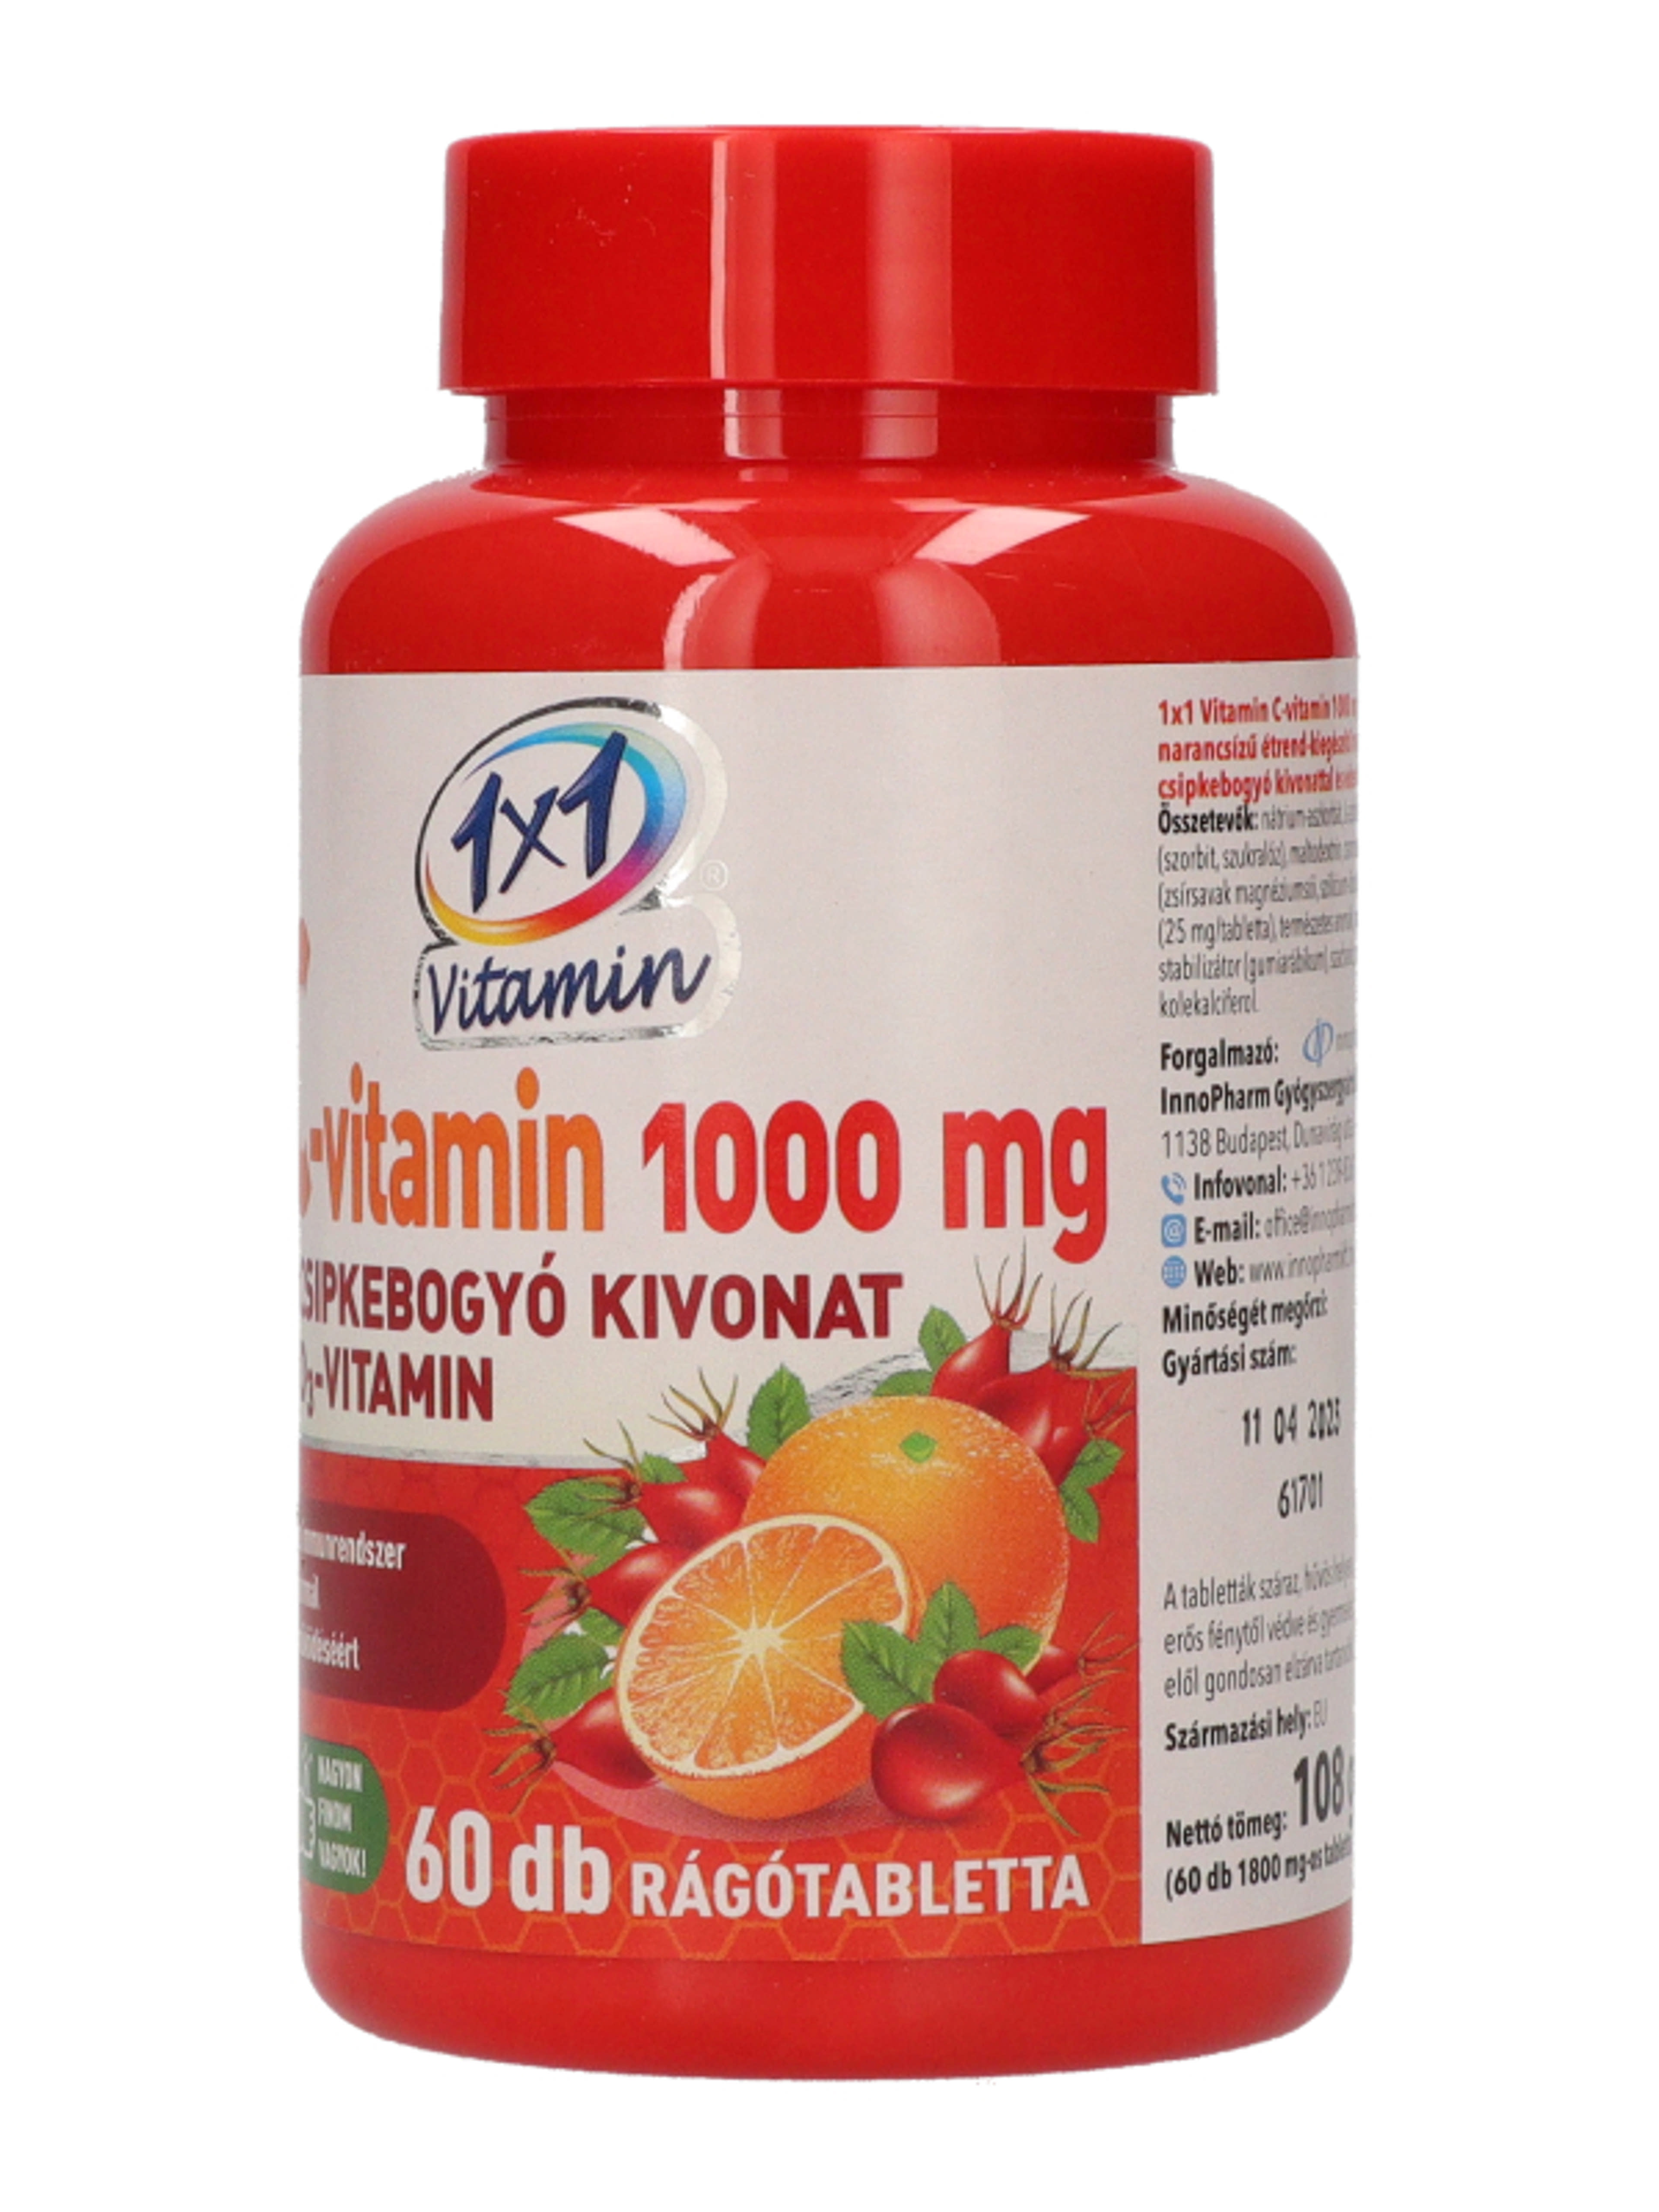 1x1 Vitamin C-Vitamin 1000mg+ D3+ rágótabletta csipkebogyóval - 60 db-2